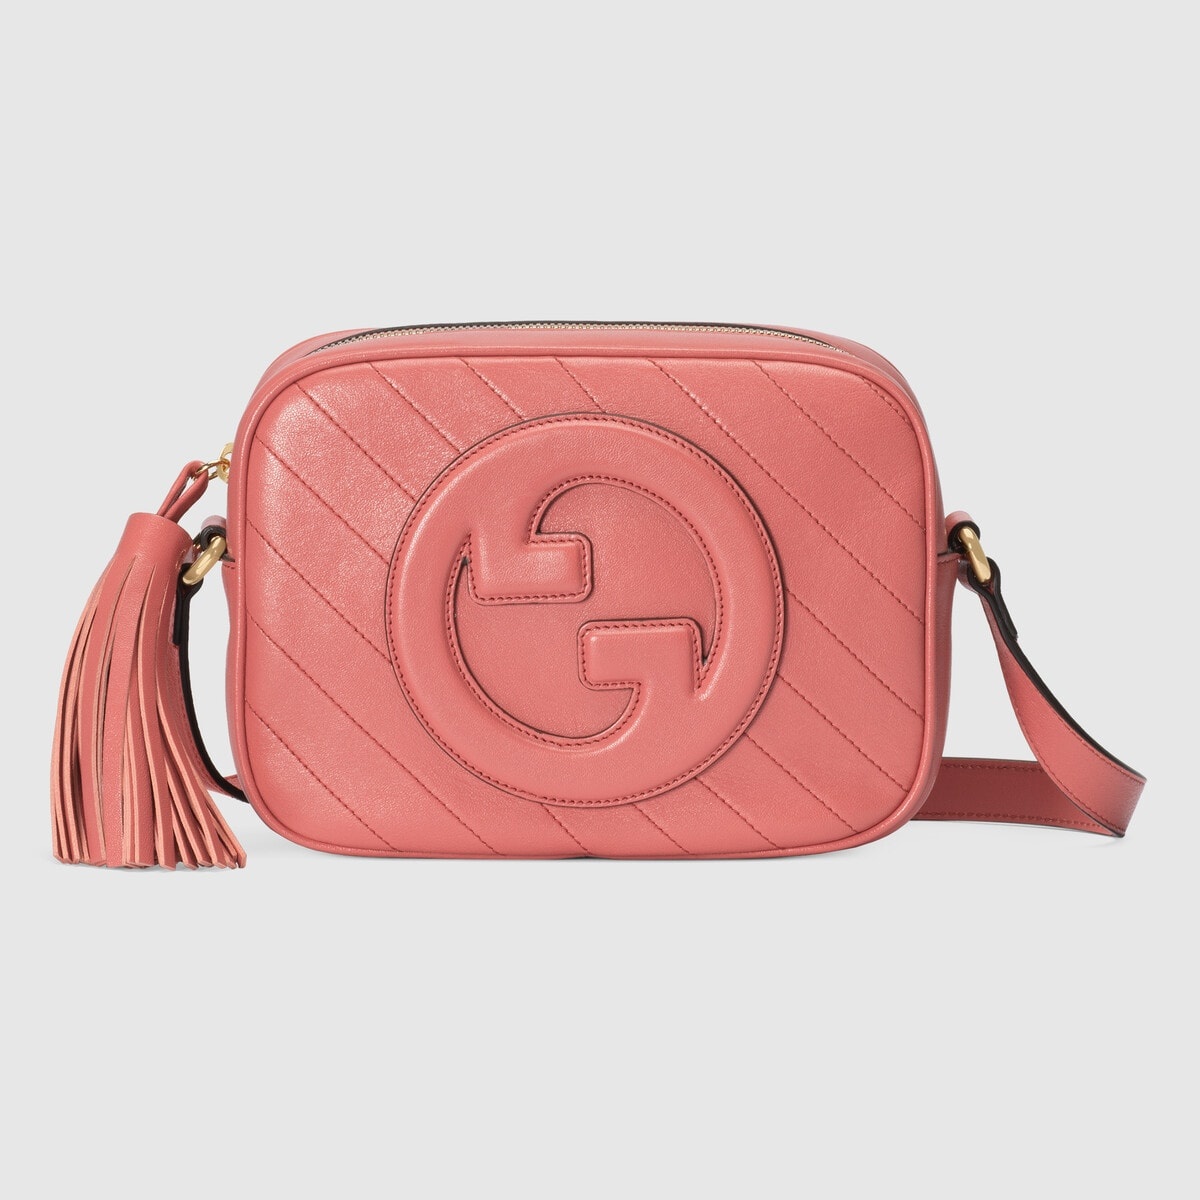 Gucci Blondie small shoulder bag - 1